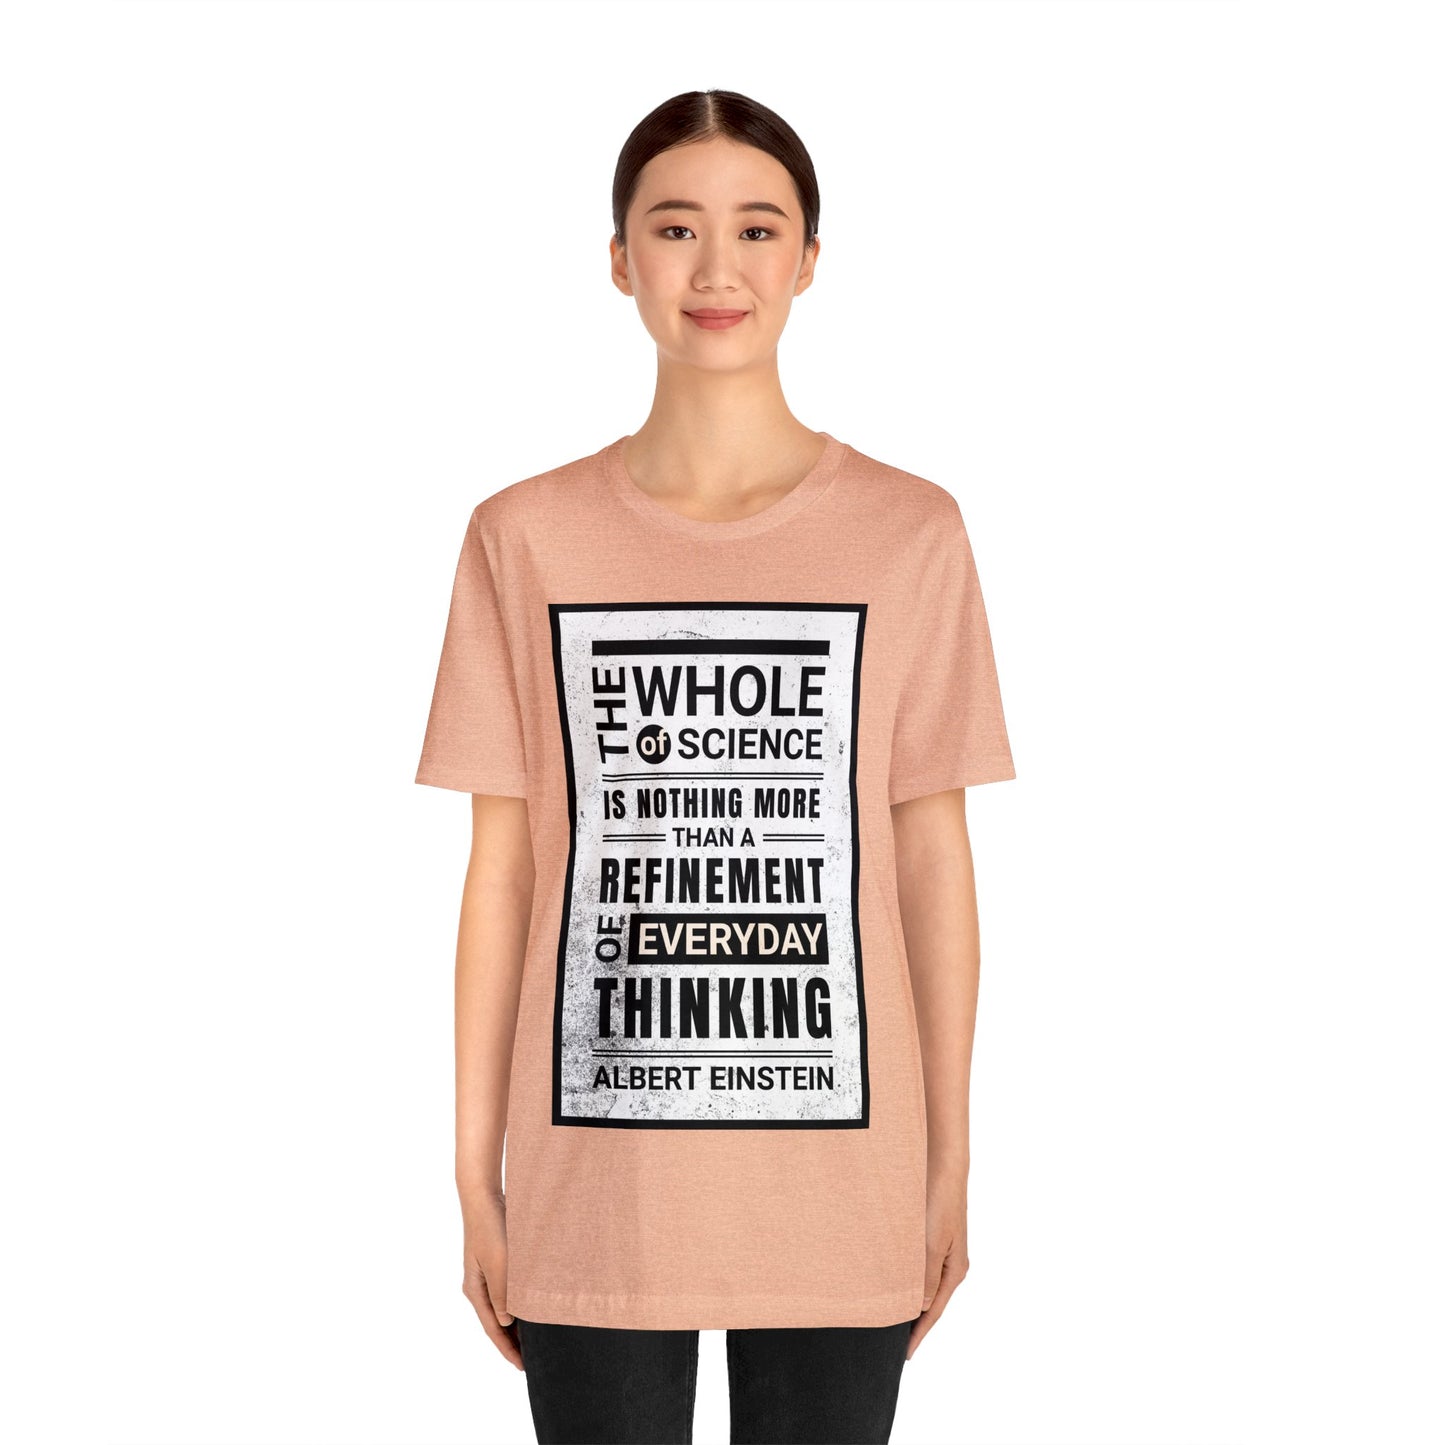 Albert Einstein T-shirt Quote Tee - Unisex Cotton Shirt with Inspirational Science Message